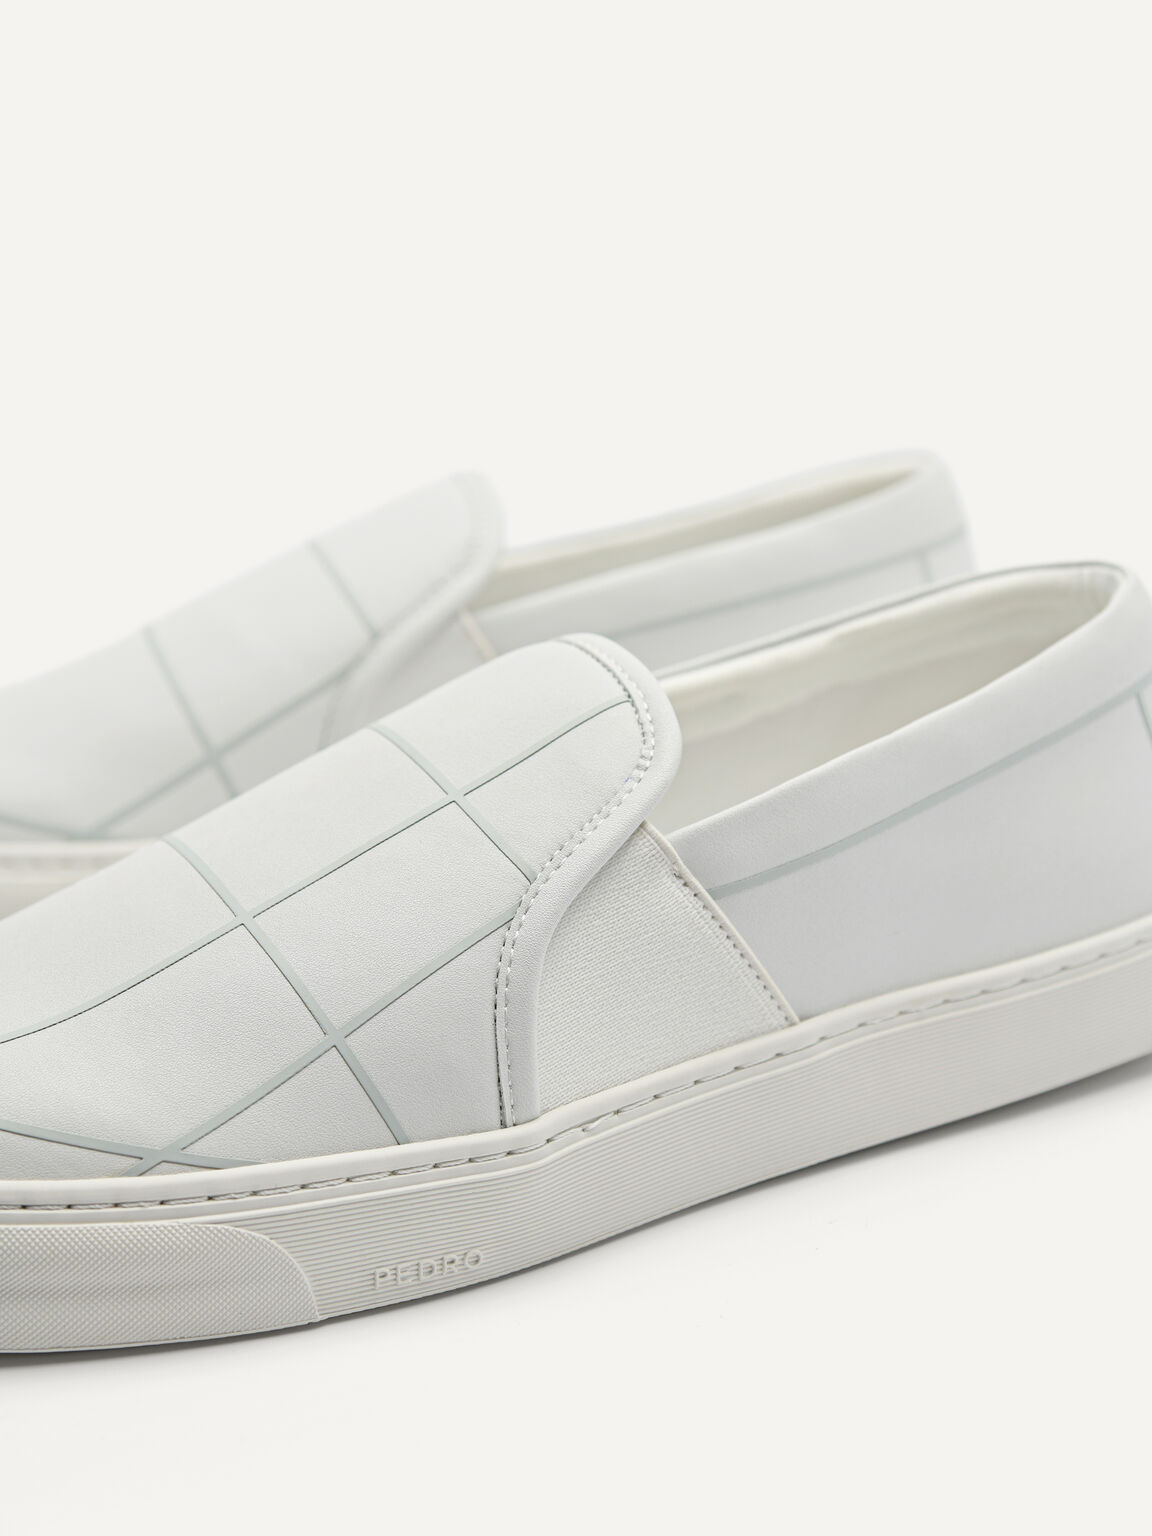 Slip On Sneakers, White